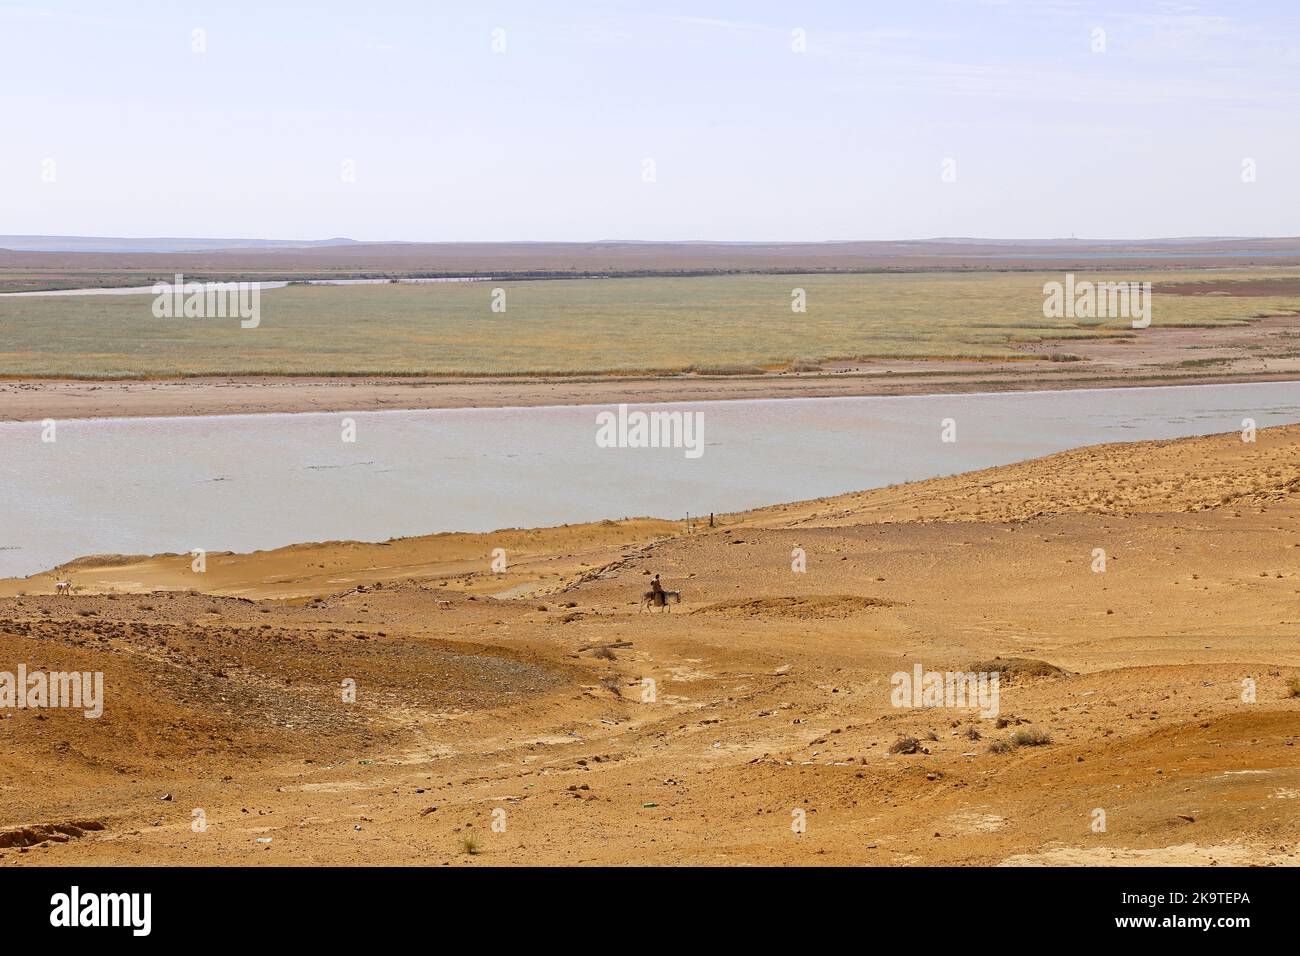 Fiume amu Darya, Meshekli, deserto di Kyzylkum, Repubblica autonoma di Karakalpakstan, Uzbekistan, Asia centrale Foto Stock